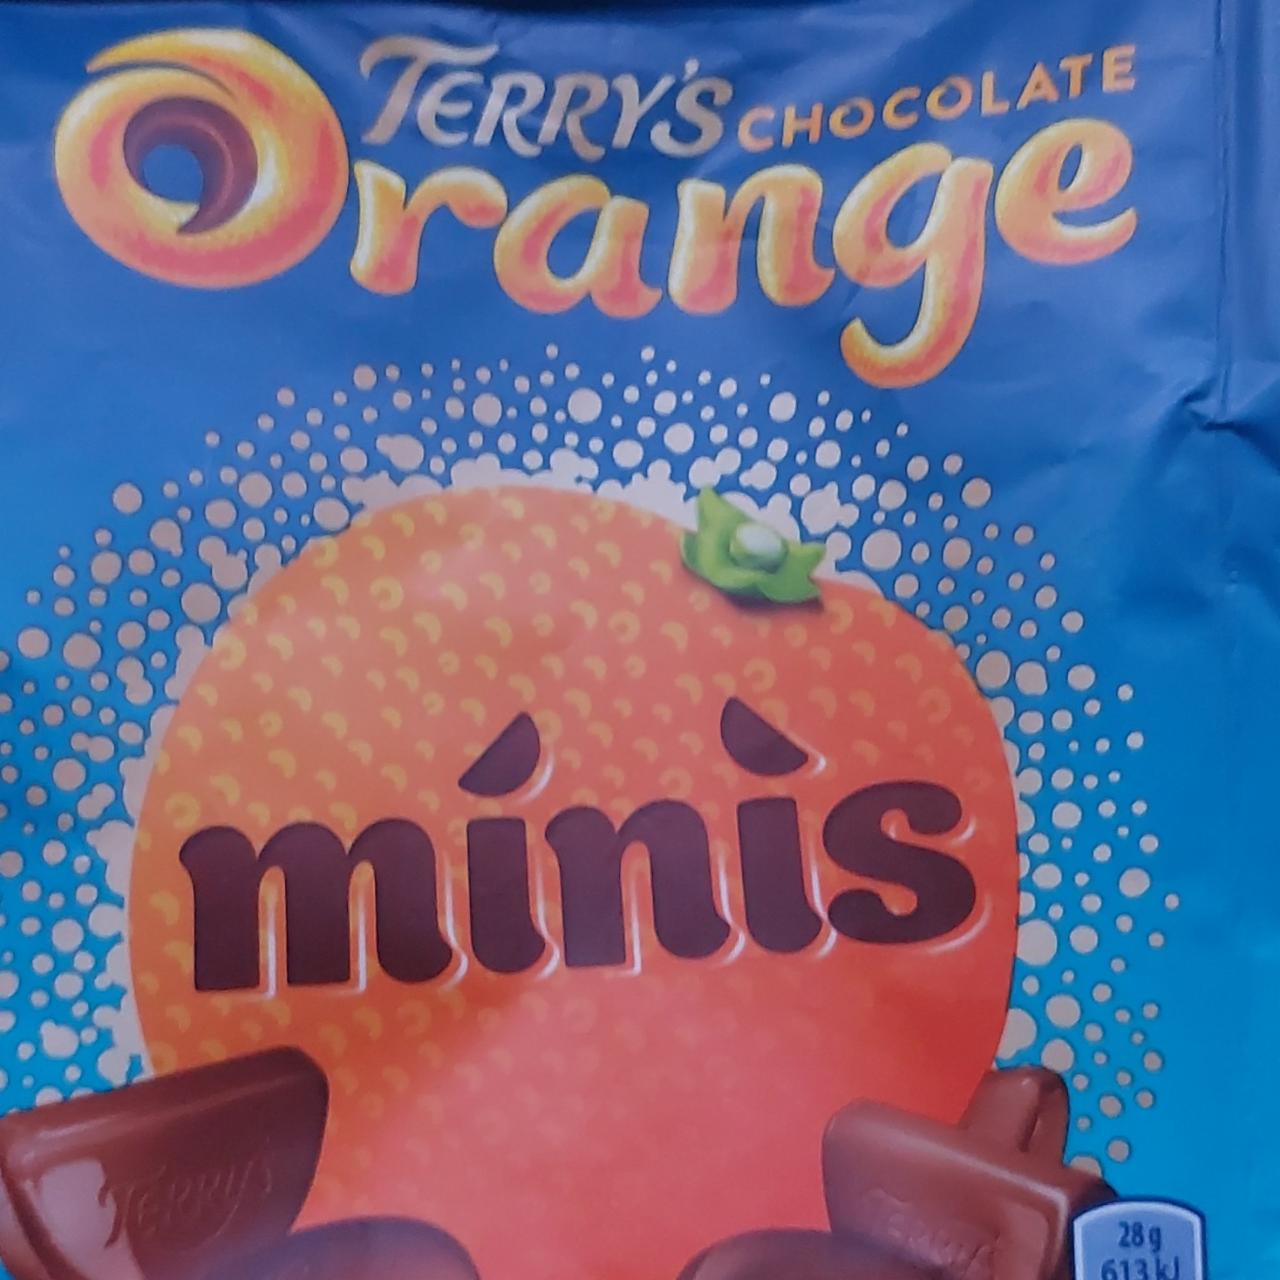 Фото - мини шоколадки апельсиновые Terry's chocolate